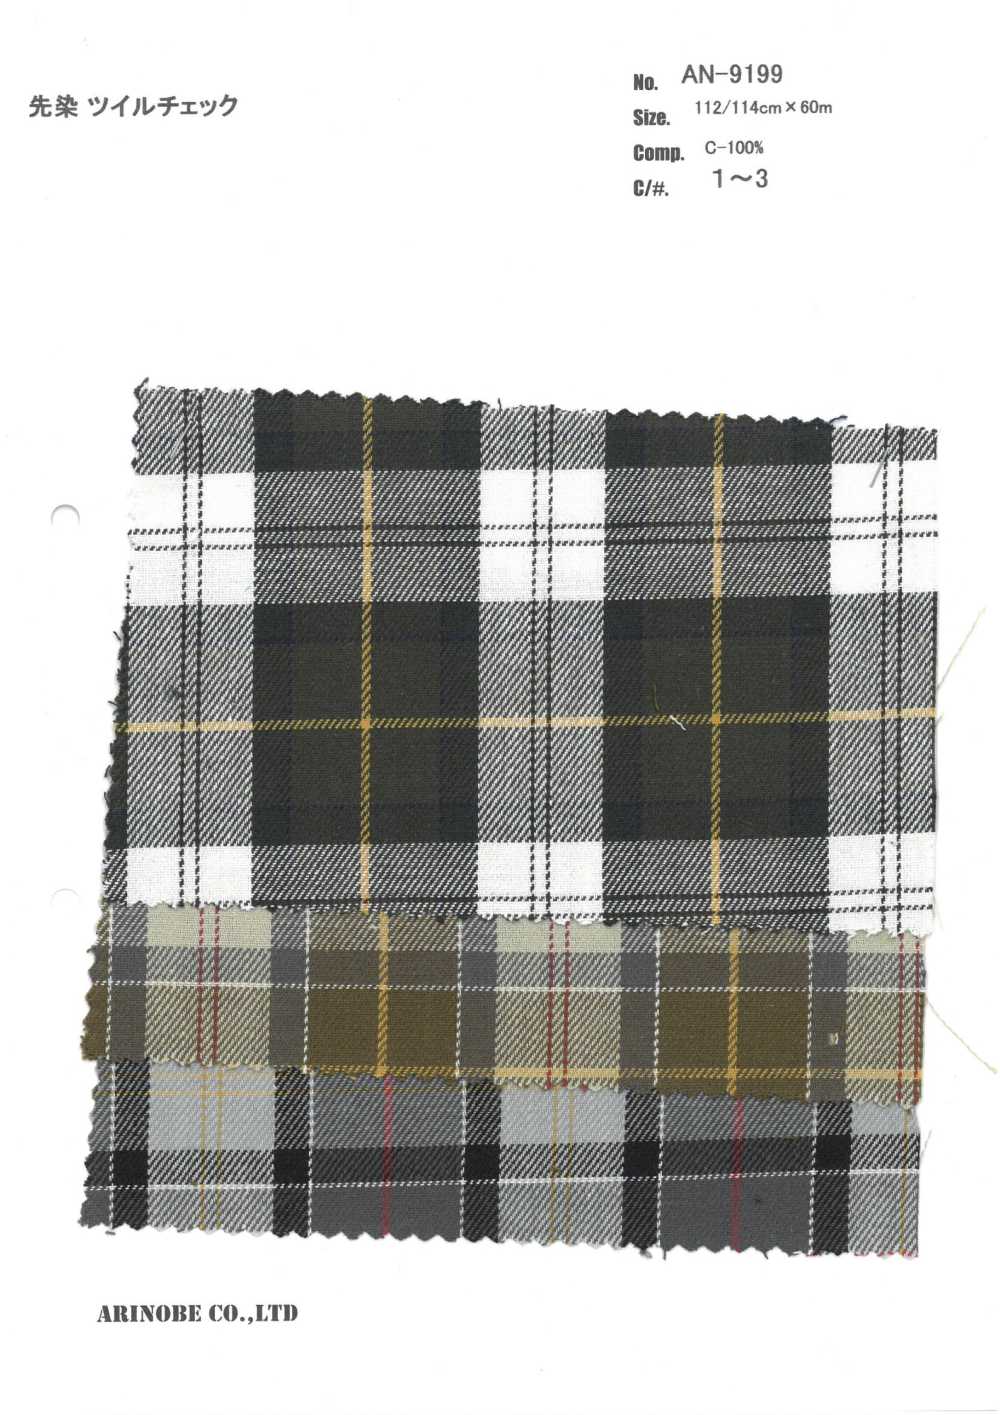 AN-9199 Yarn Dyed Twill Check[Textile / Fabric] ARINOBE CO., LTD.